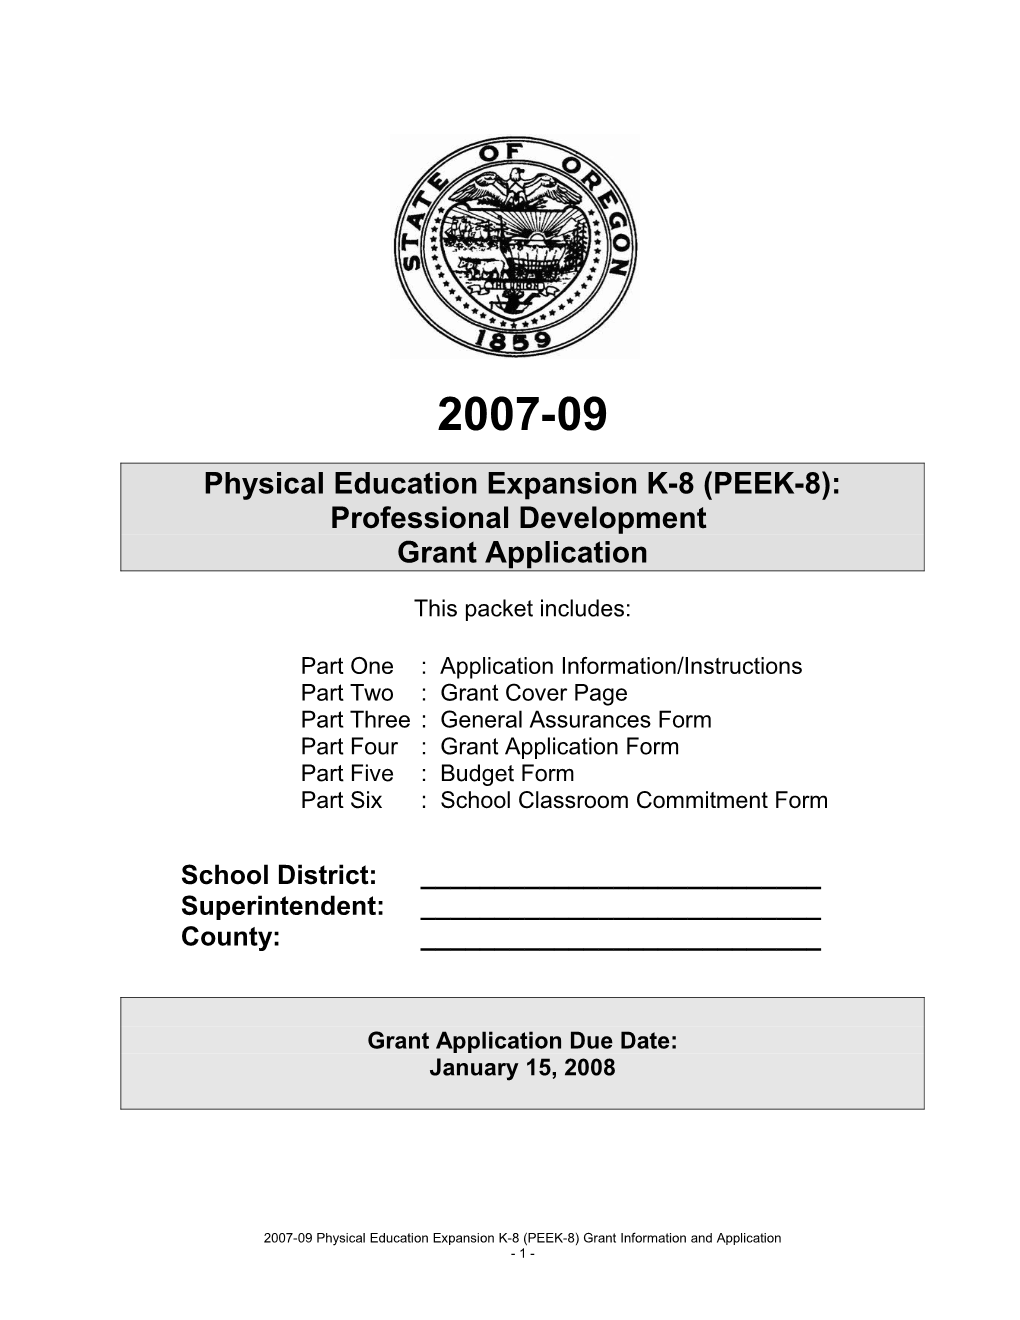 Physical Education Expansion K-8 (PEEK-8): Professional Development